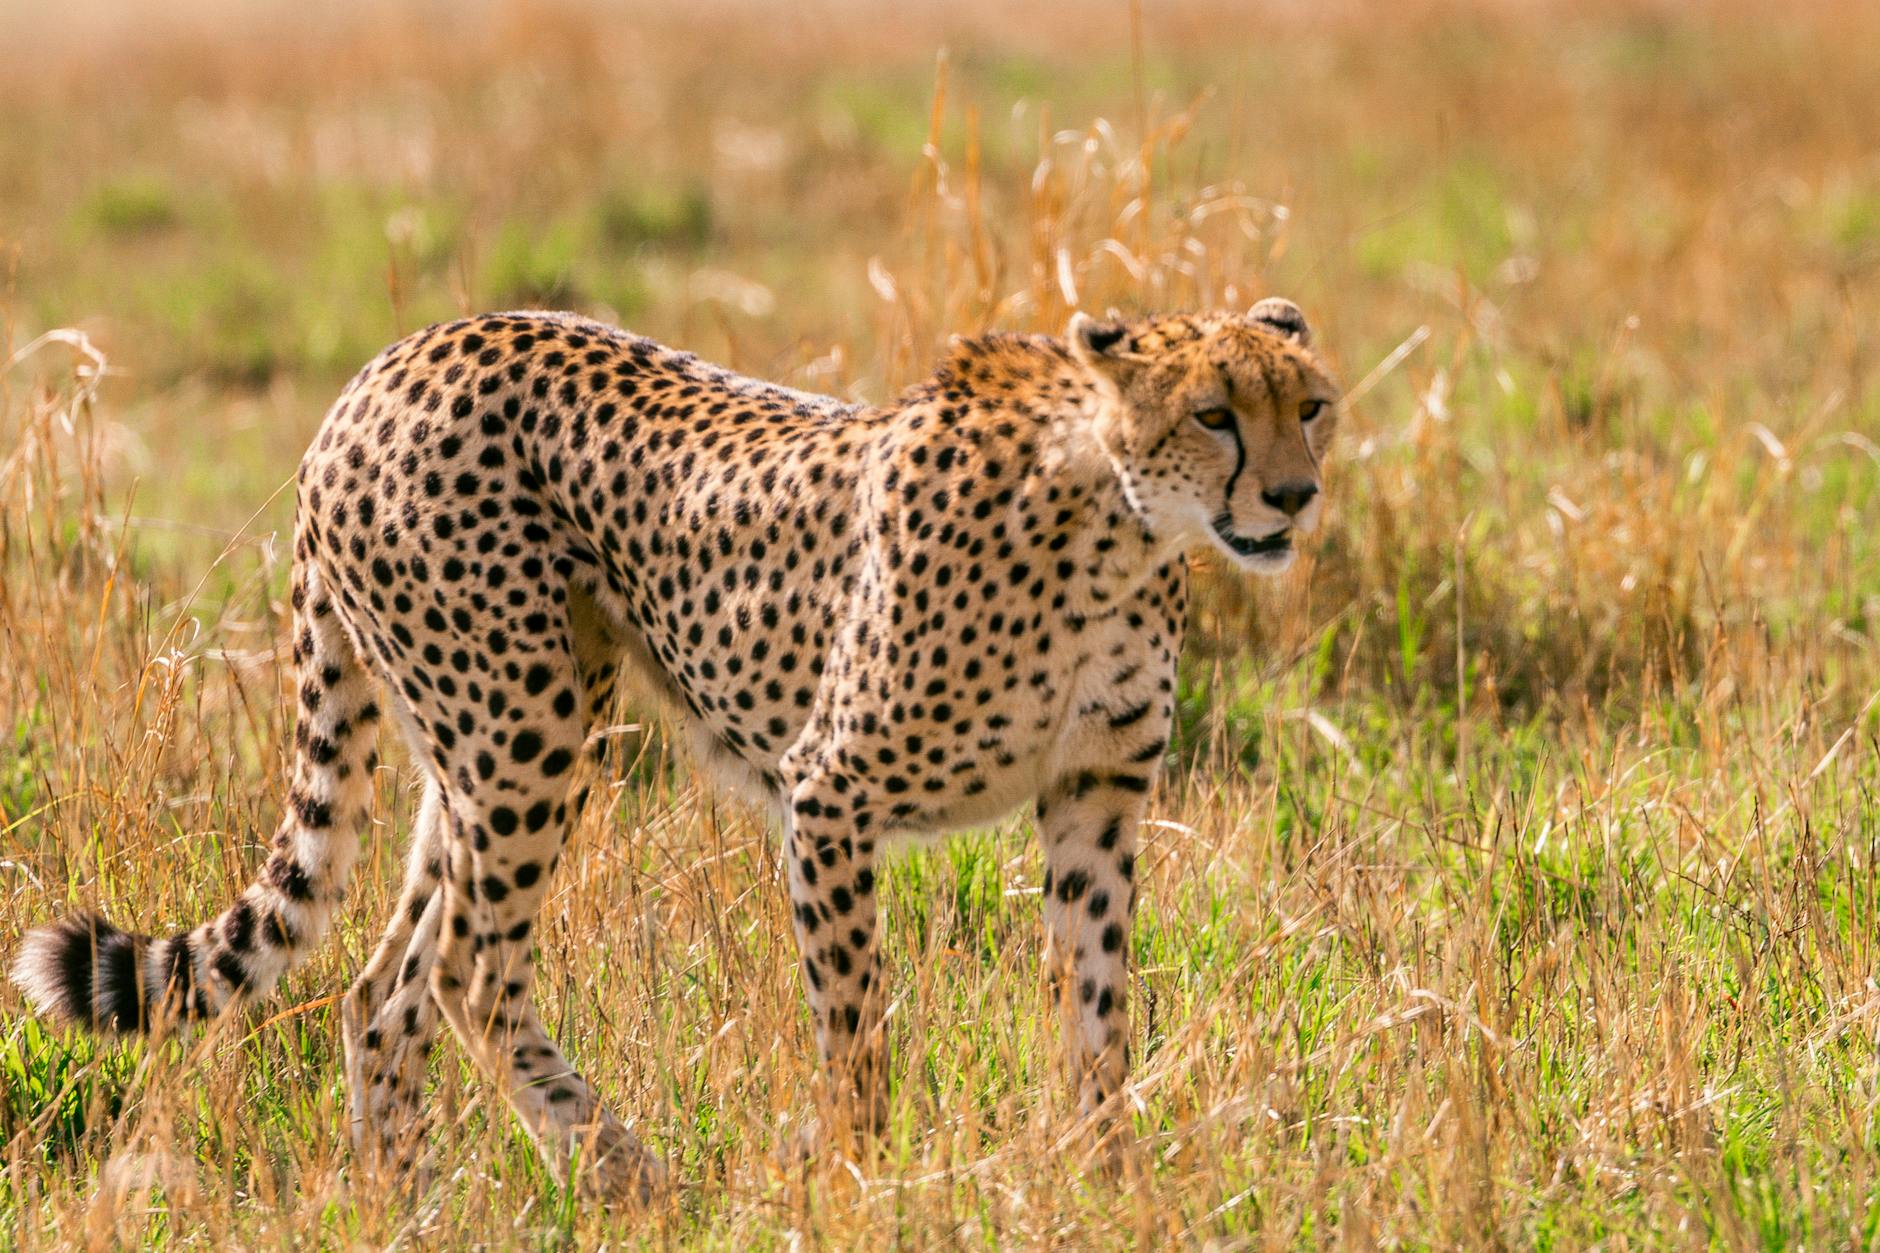 Wild cheetah hunting in savanna · Free Stock Photo